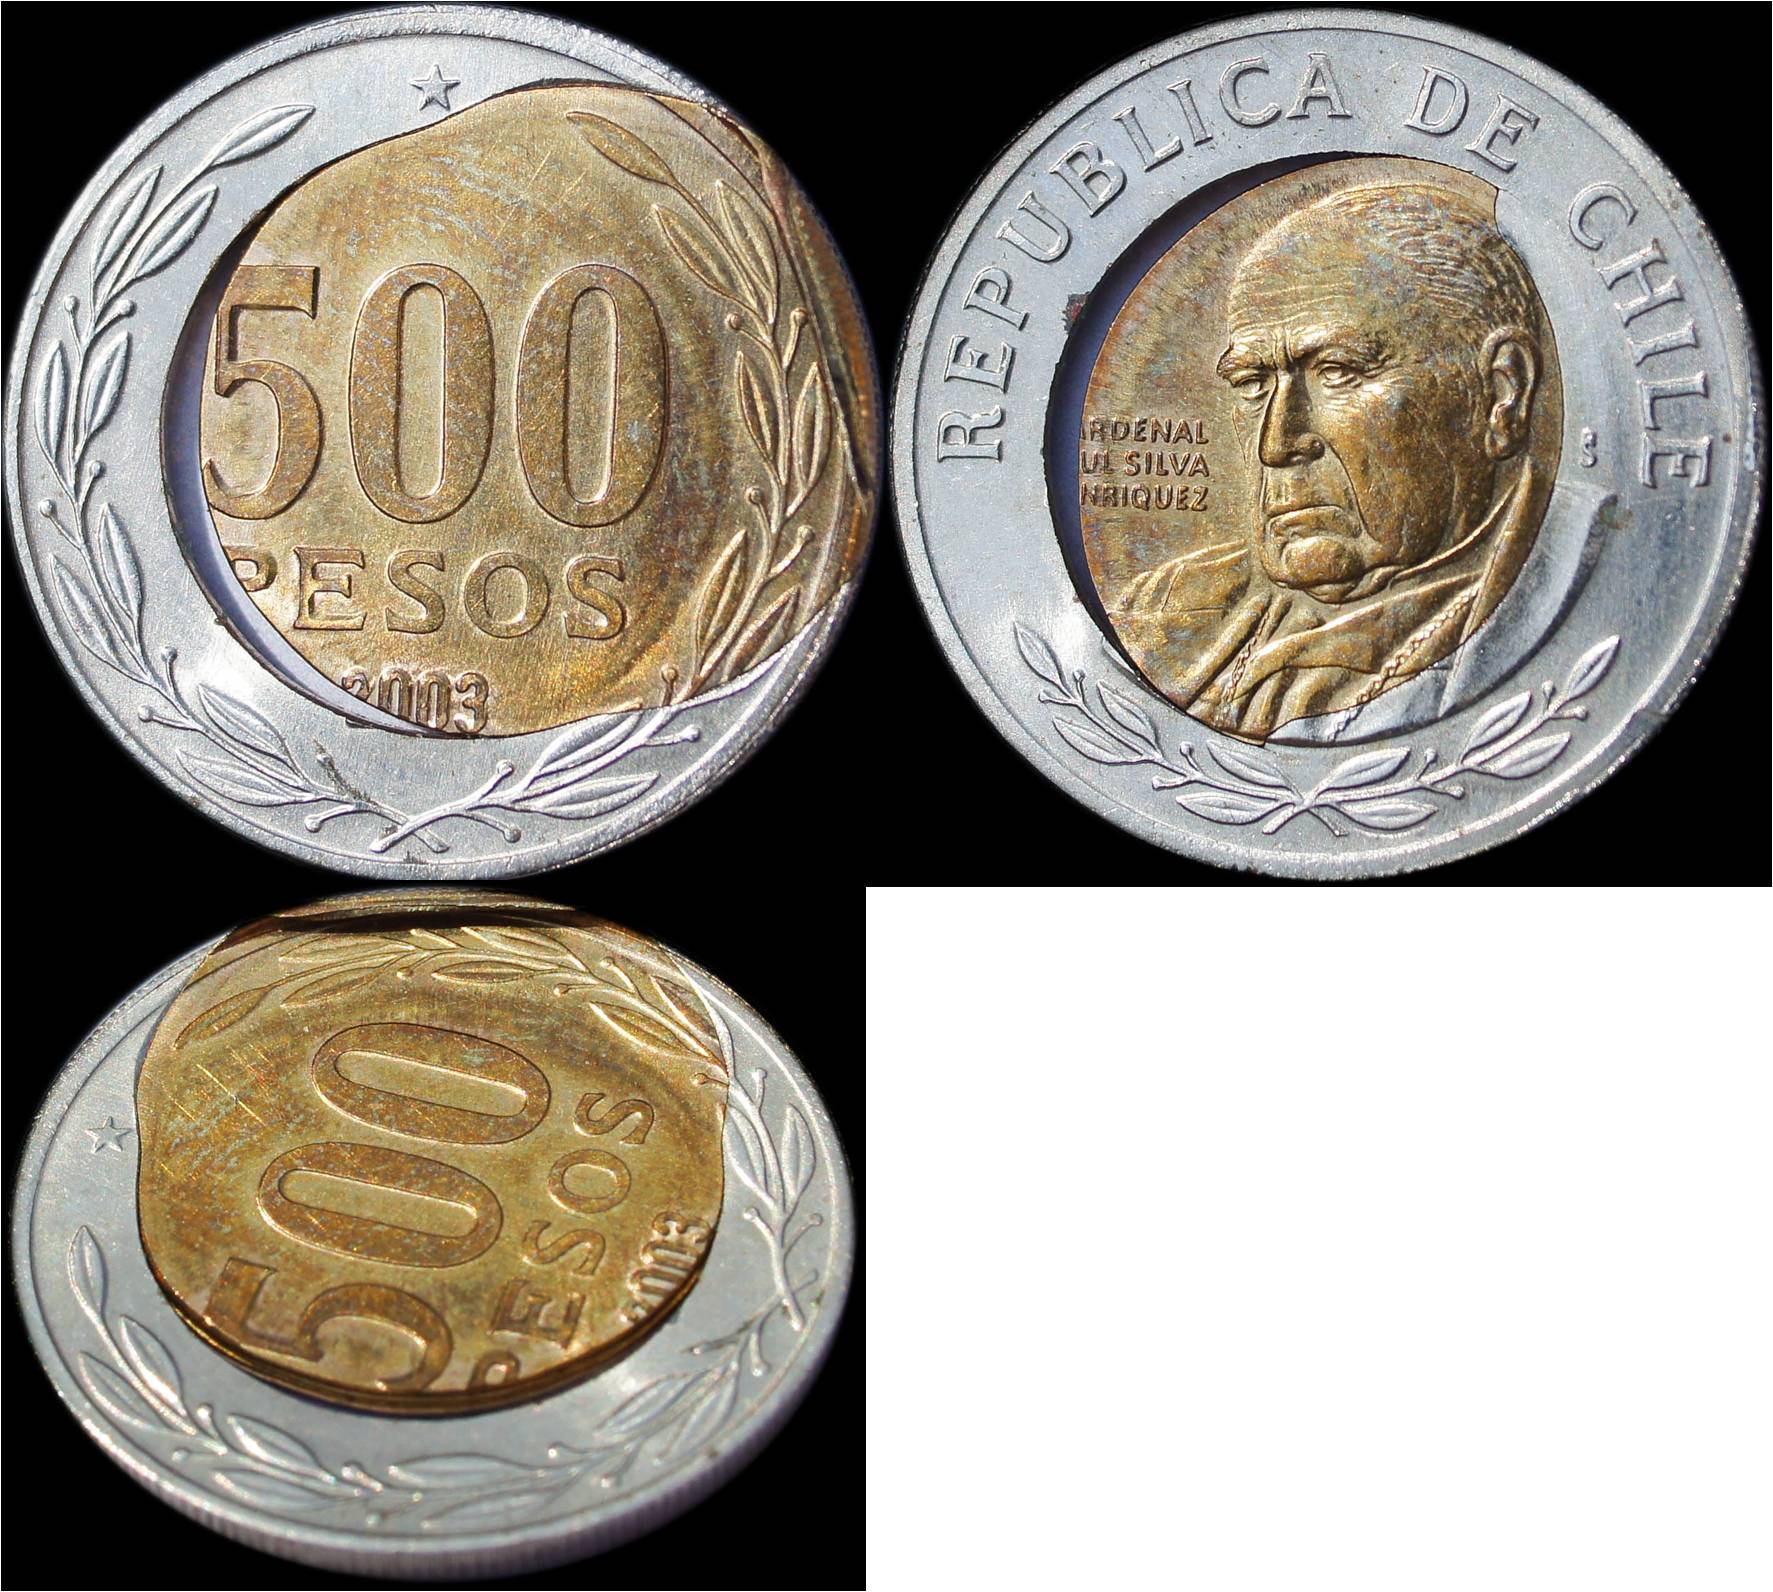 Chile 2003 500 pesos misaligned core error.jpg